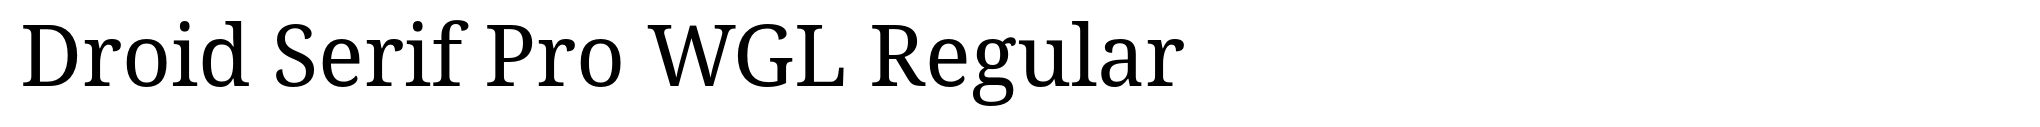 Droid Serif Pro WGL Regular image